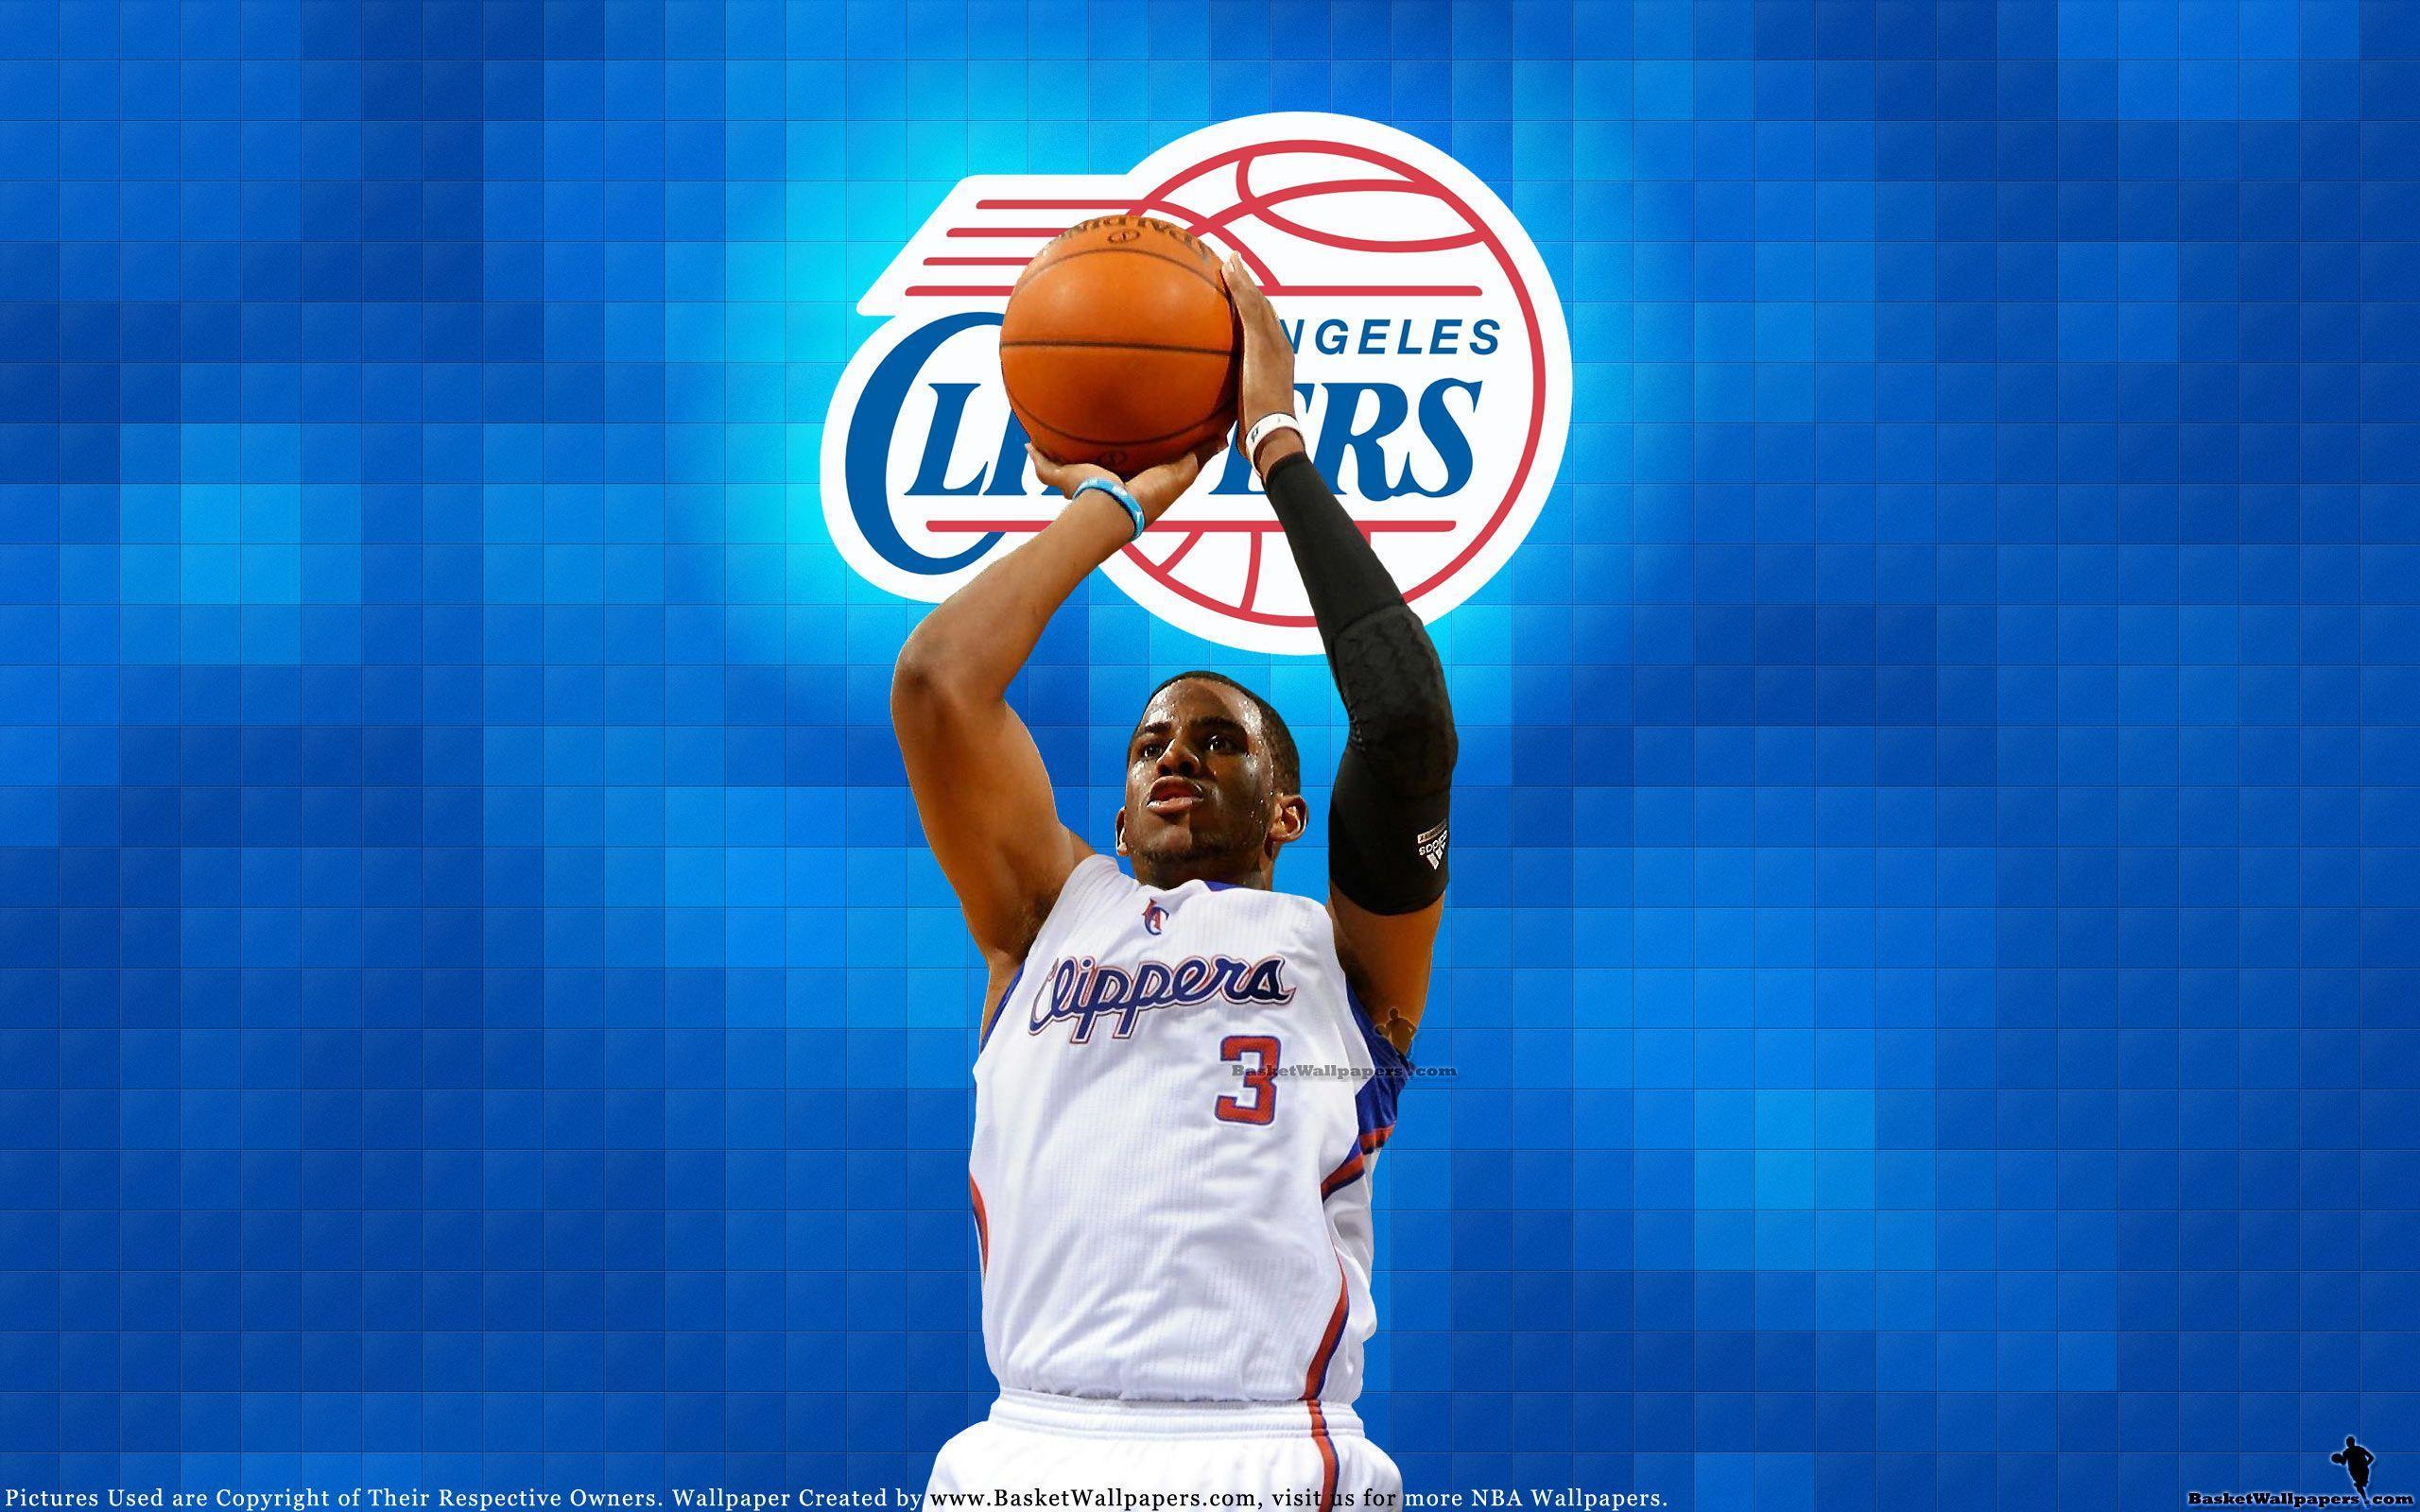 Los Angeles Clippers Wallpaper. Basketball Wallpaper at